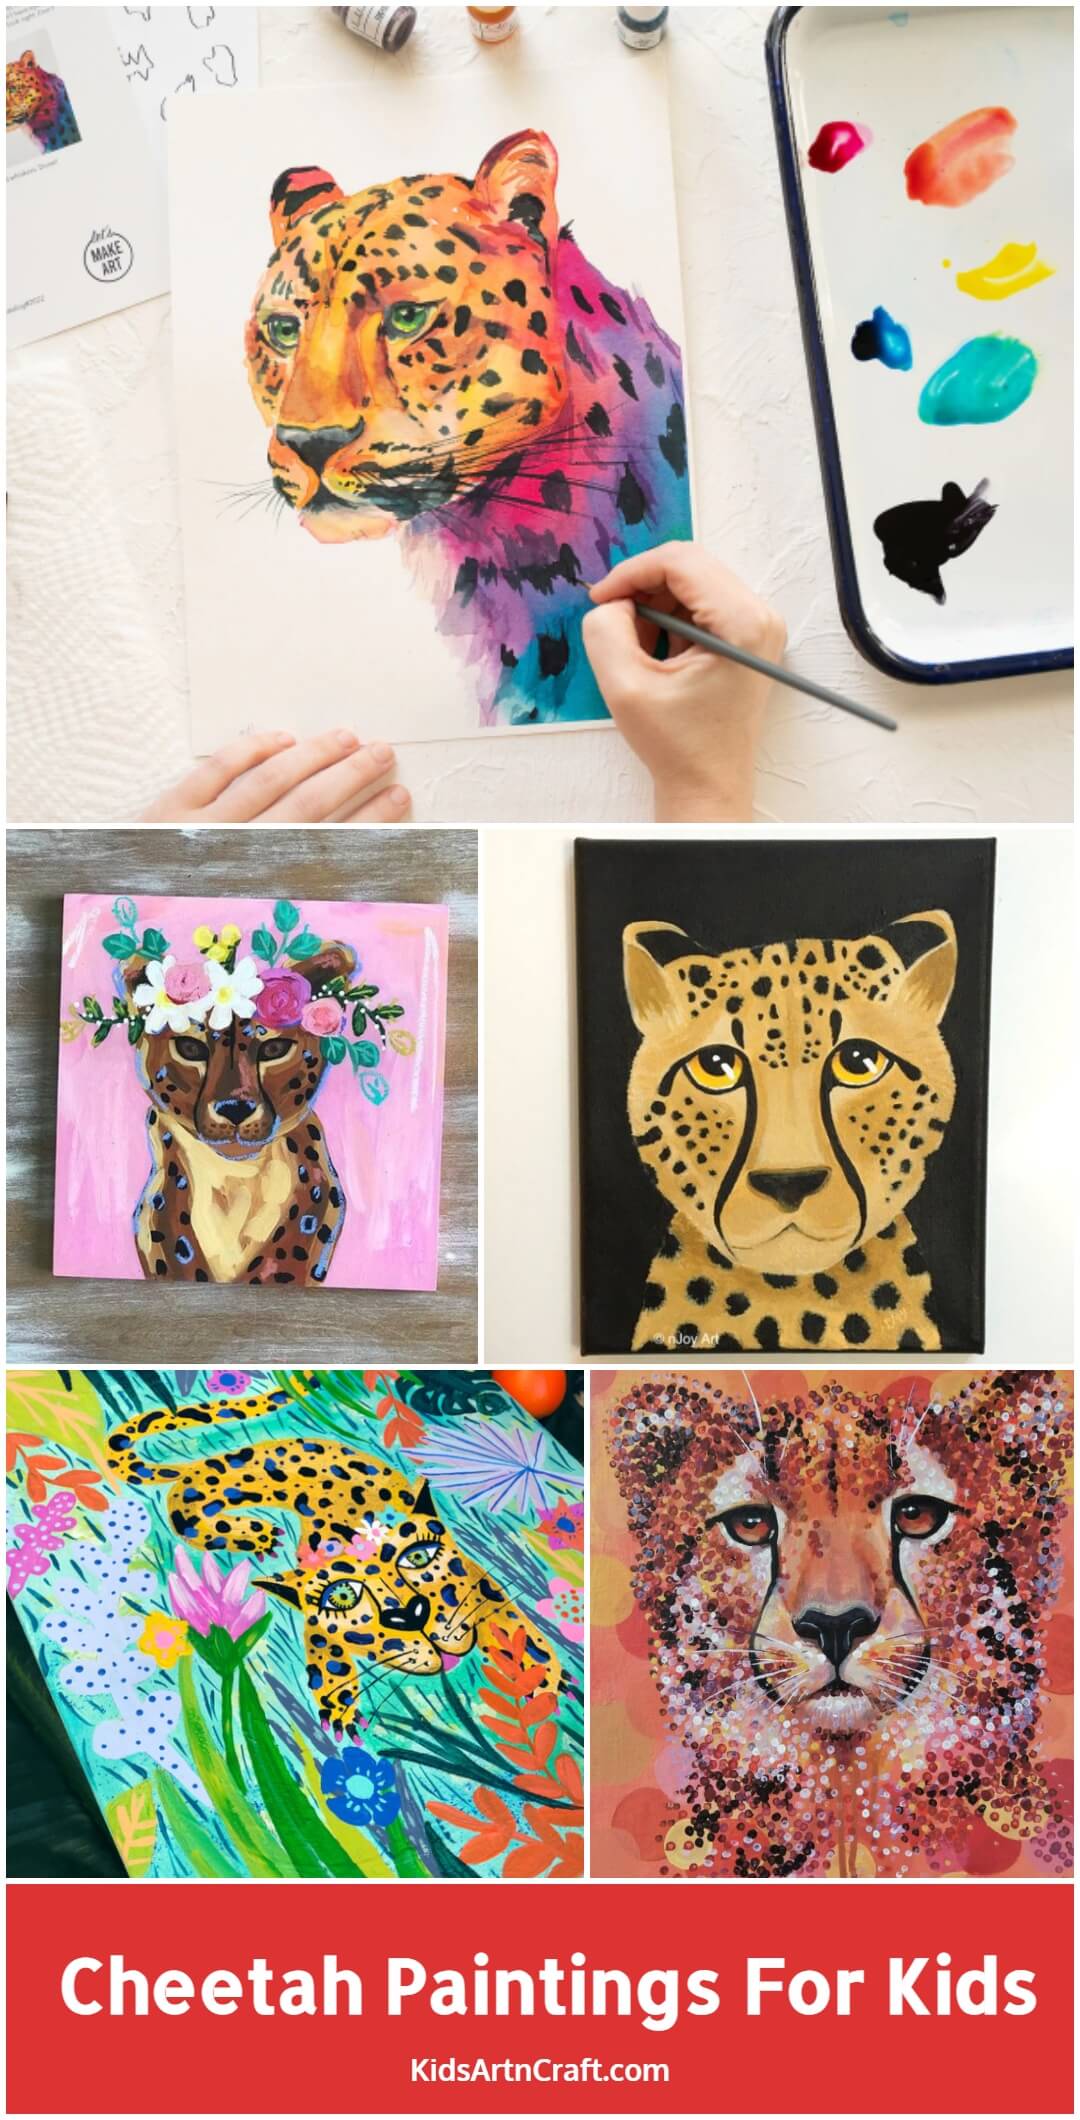 Cheetah Paintings for Kids